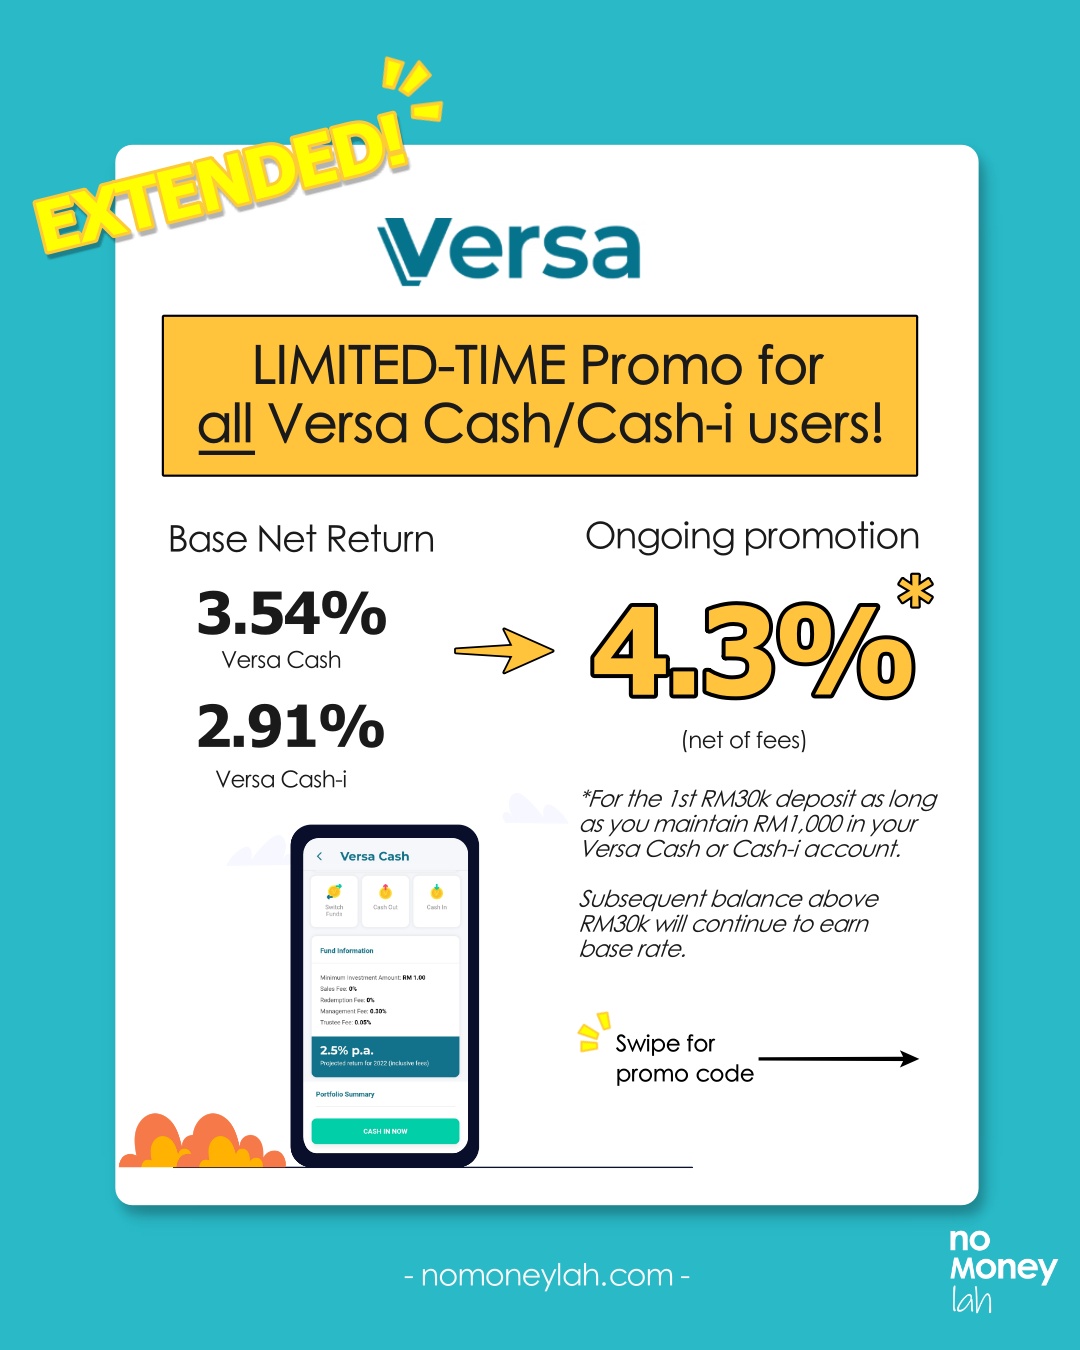 Versa Cash 4.3% promotional rate